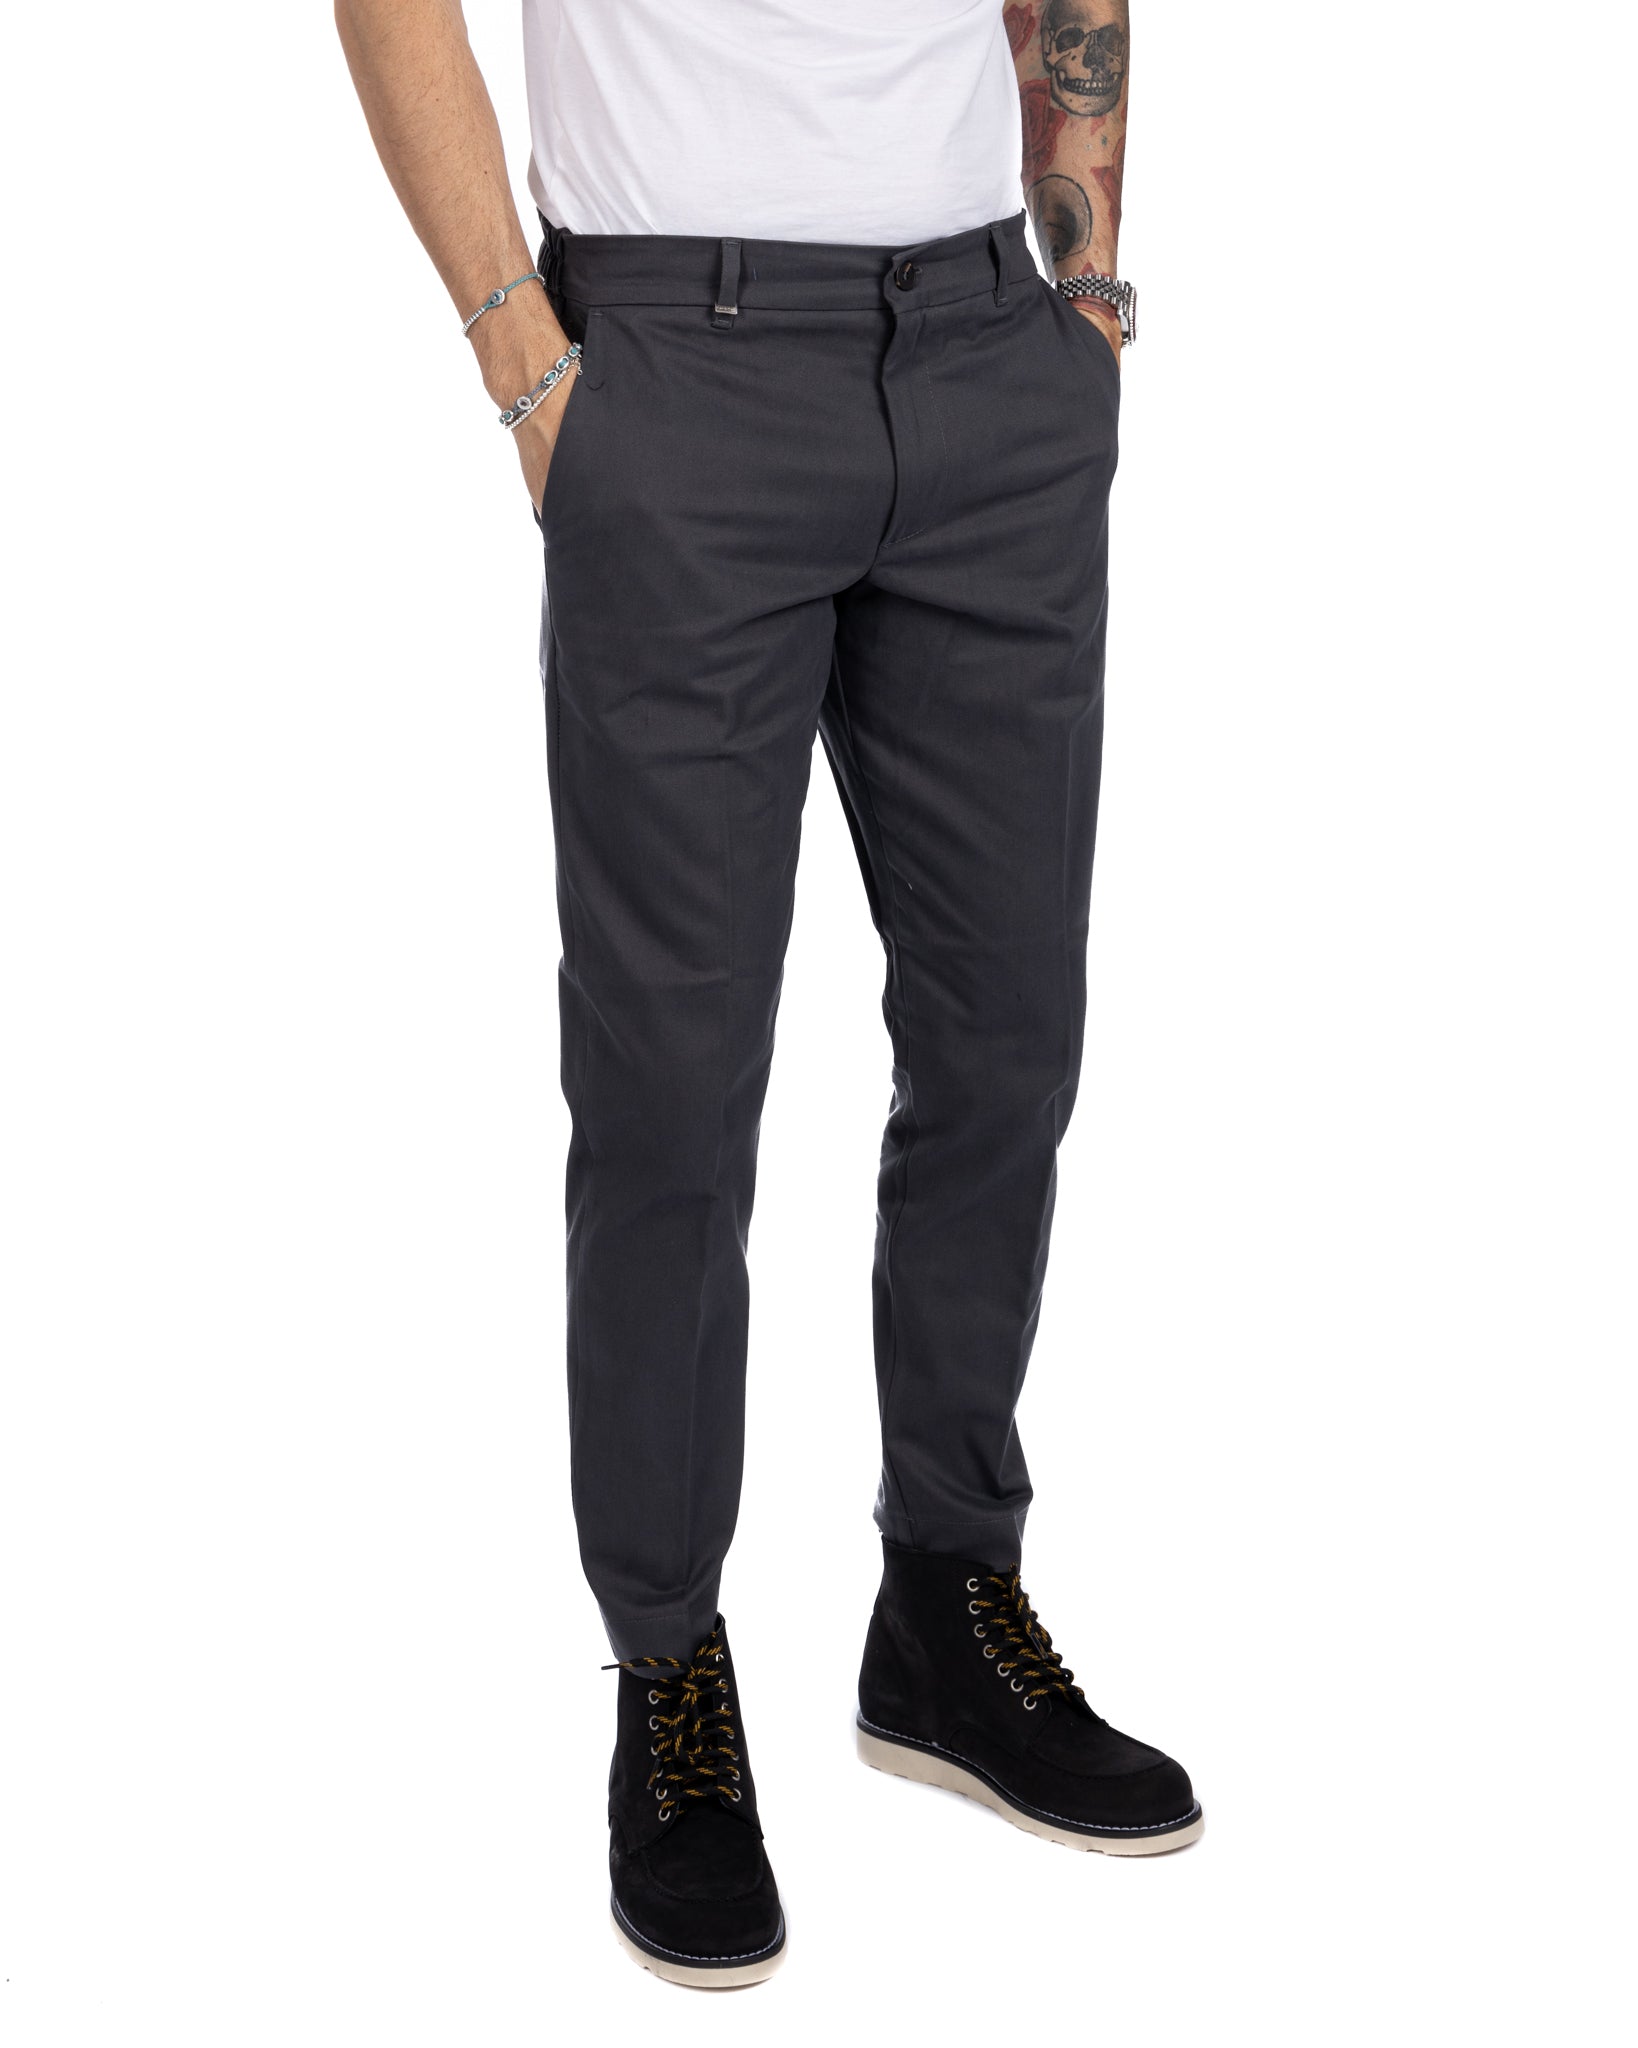 Elder - gray cotton capri trousers